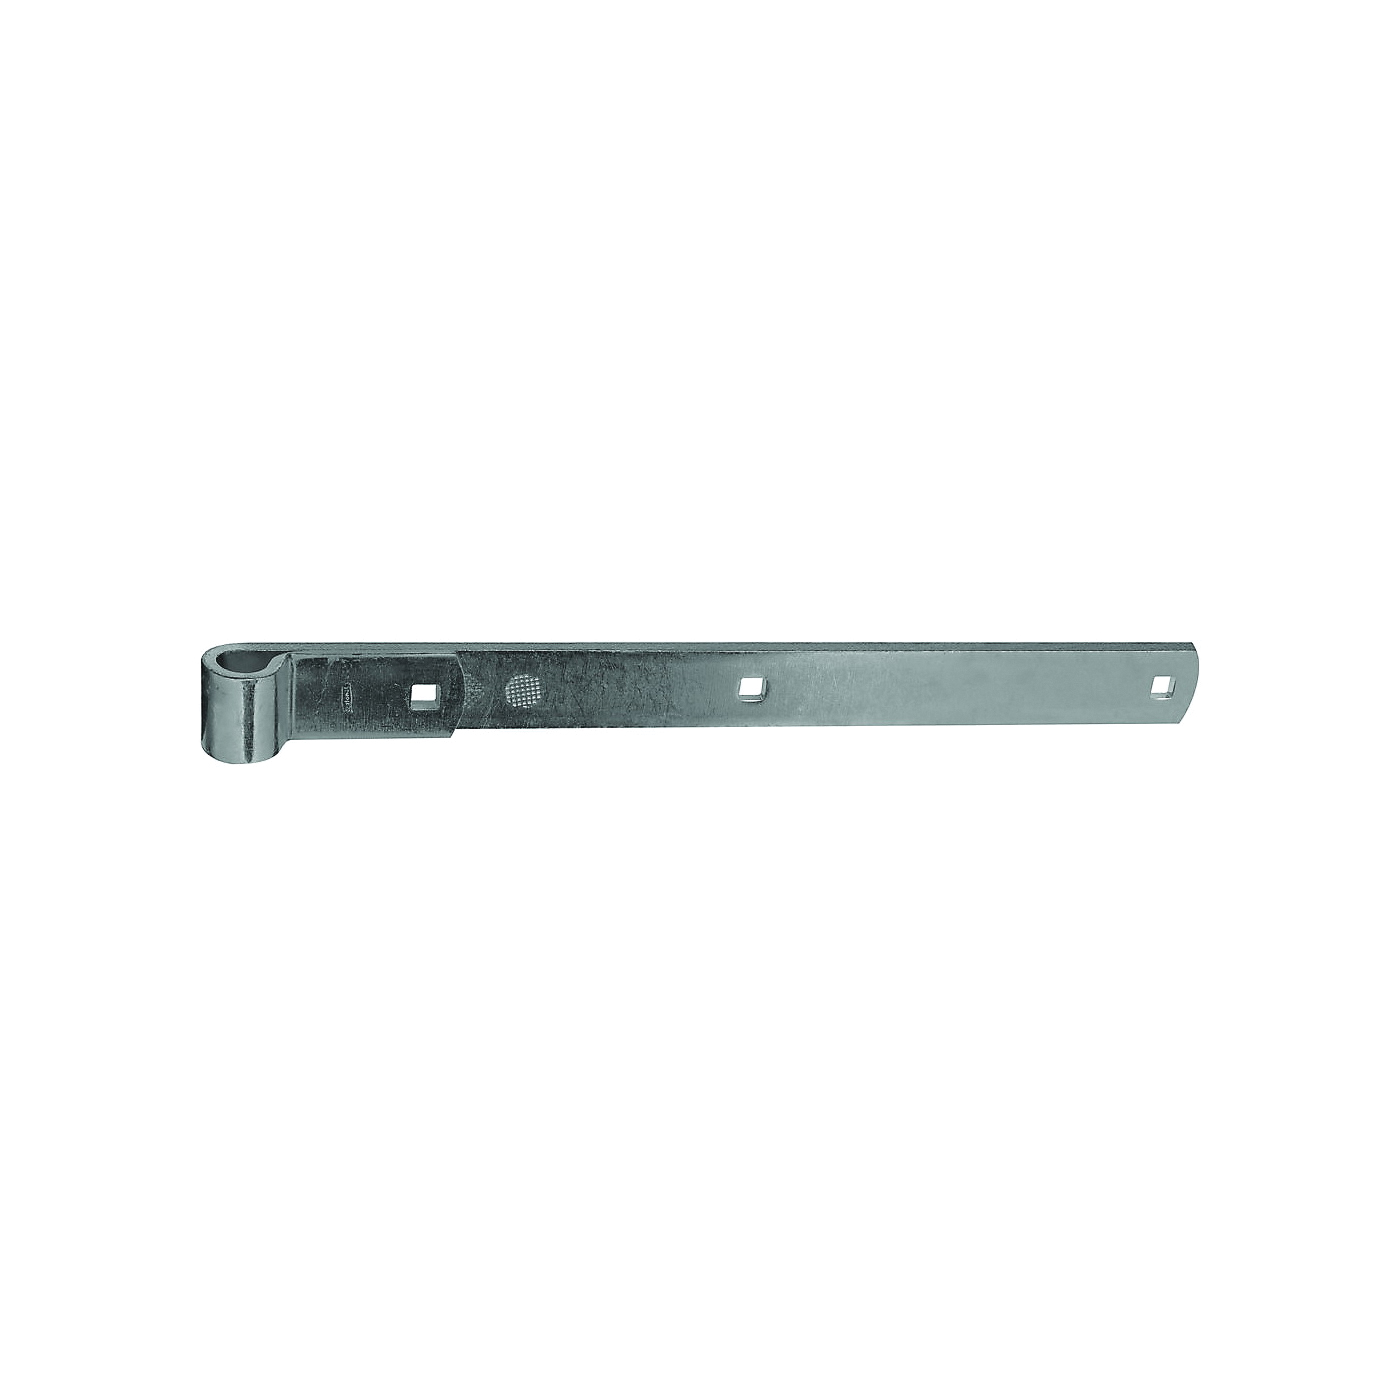 N168-336 Strap Hinge, 1/4 in Thick Leaf, Steel, Zinc, 200 lb